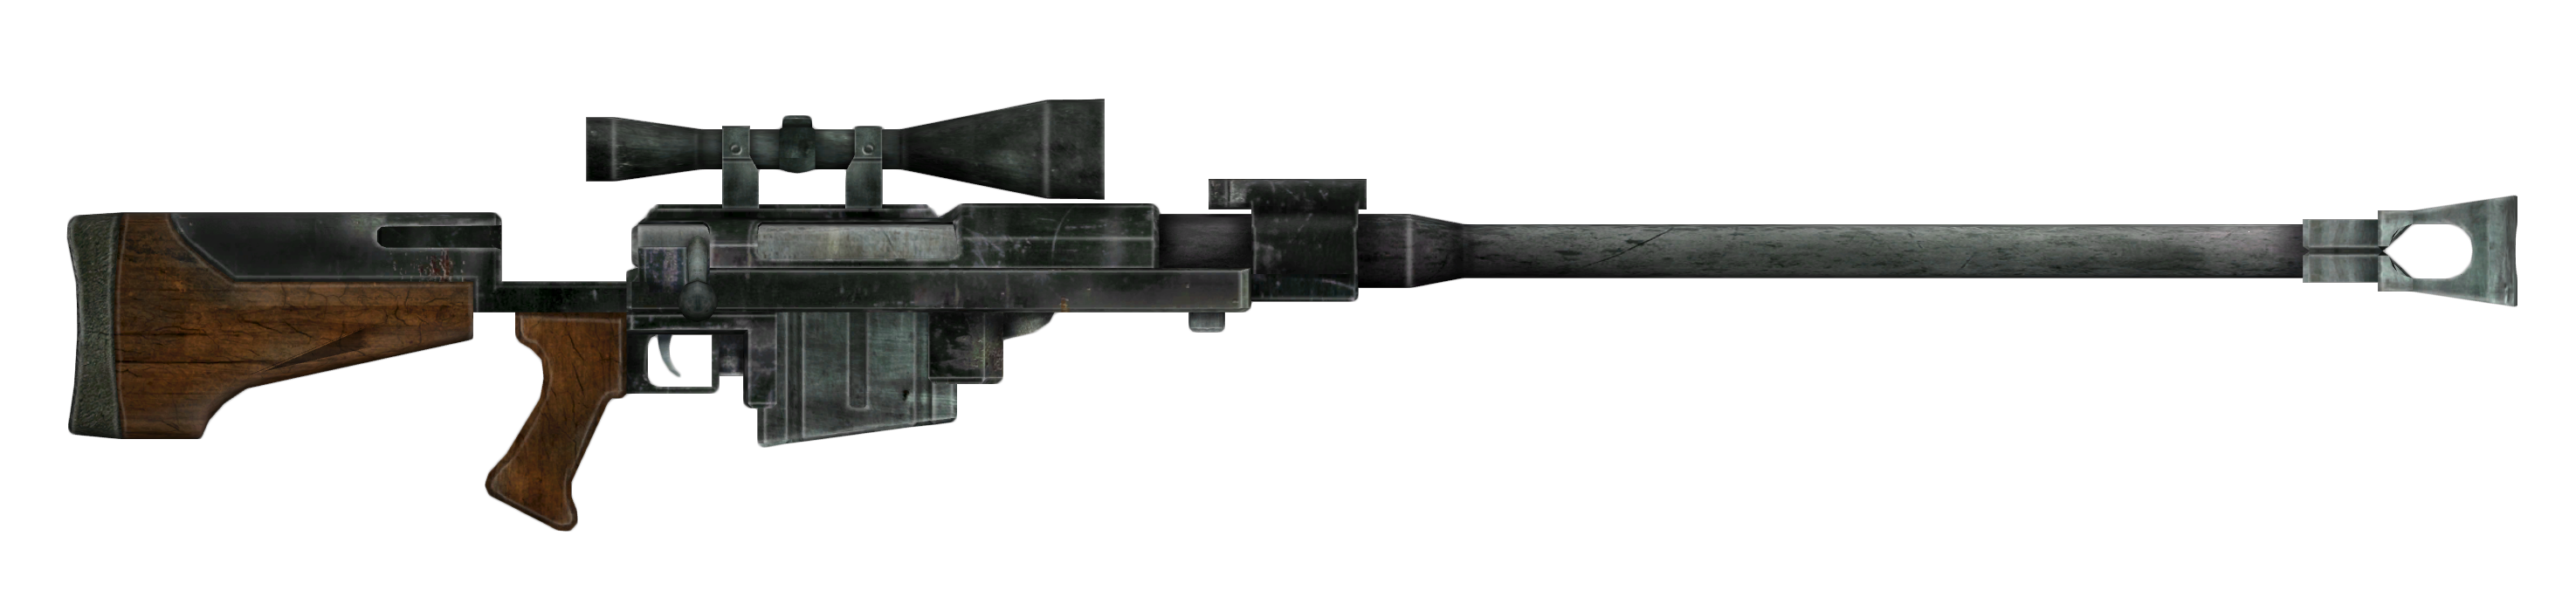 fnv anti material rifle